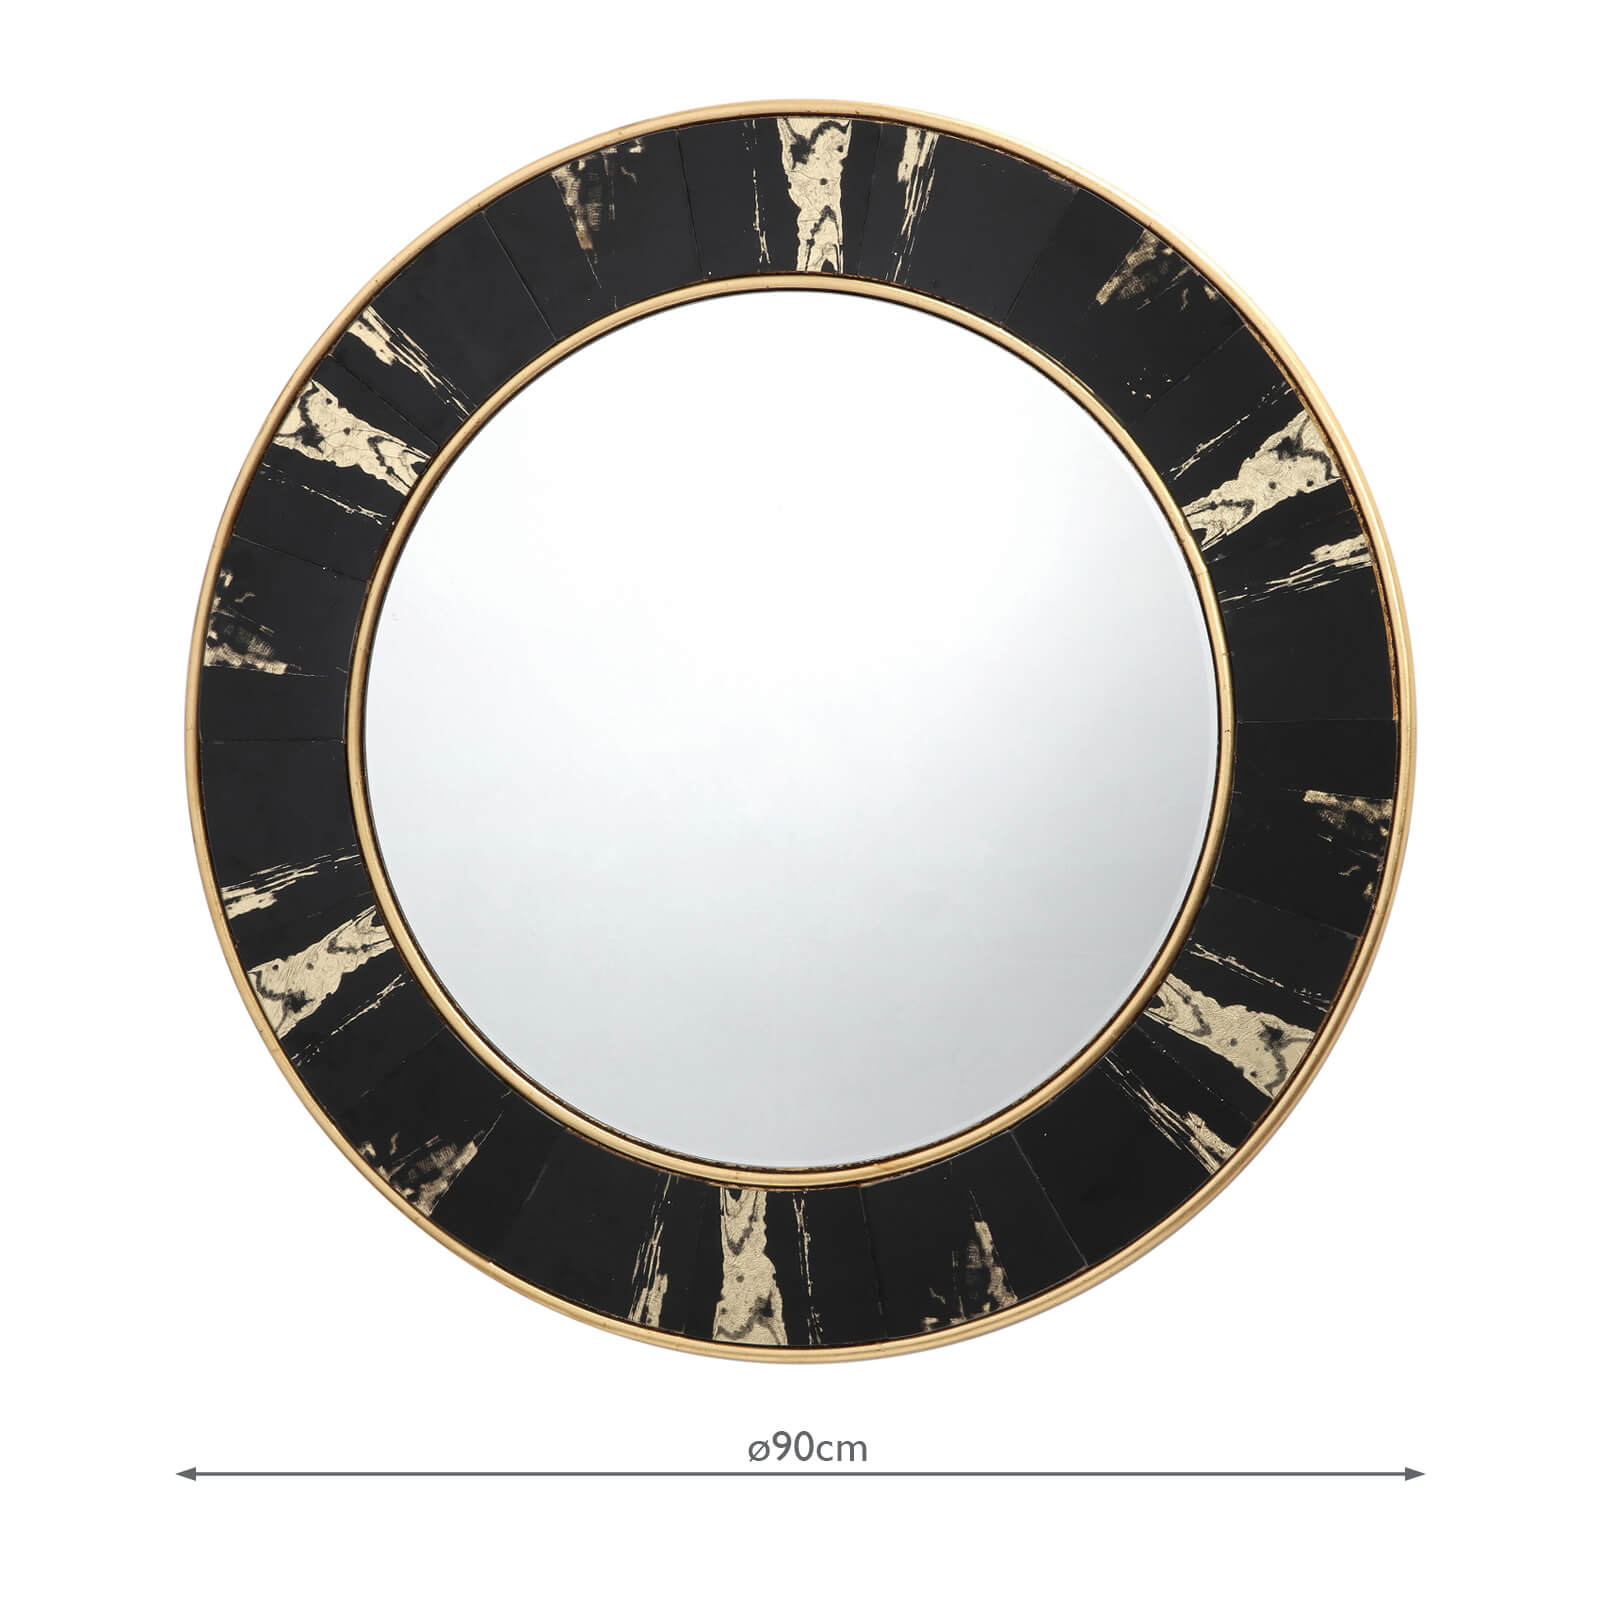 Sidone Round Mirror With Black Gold, Gold Circular Mirror 80cm